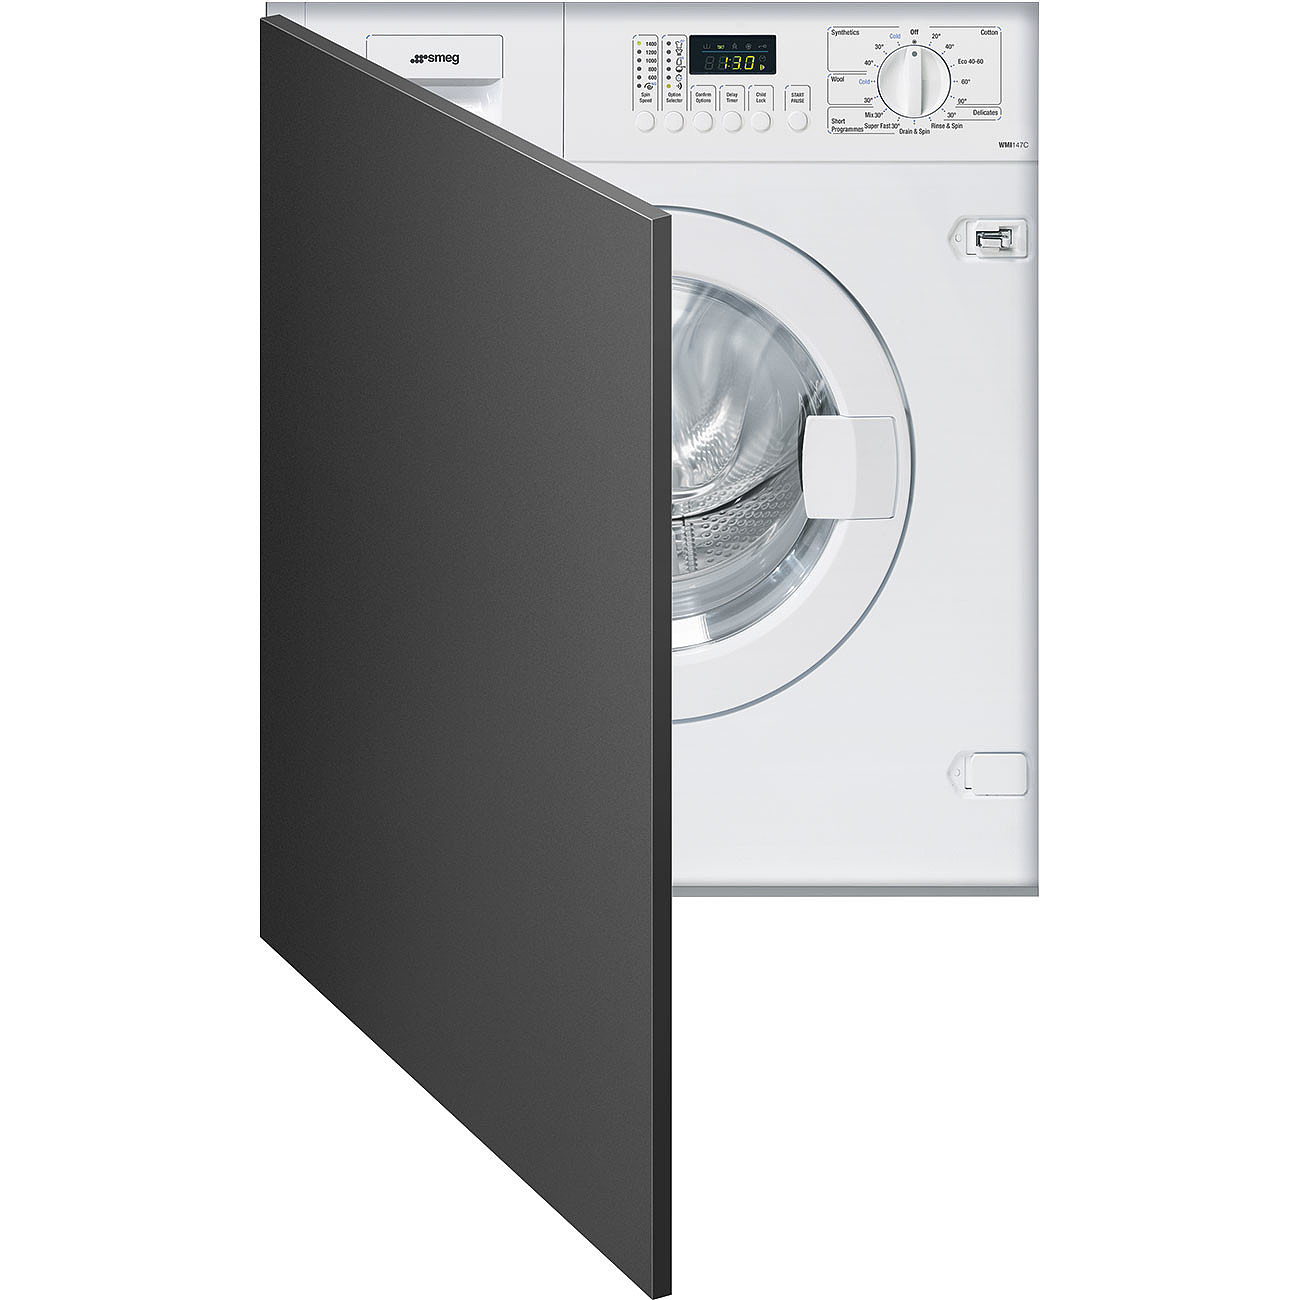 WMI147C 60cm 7kg Fully Integrated Washing Machine